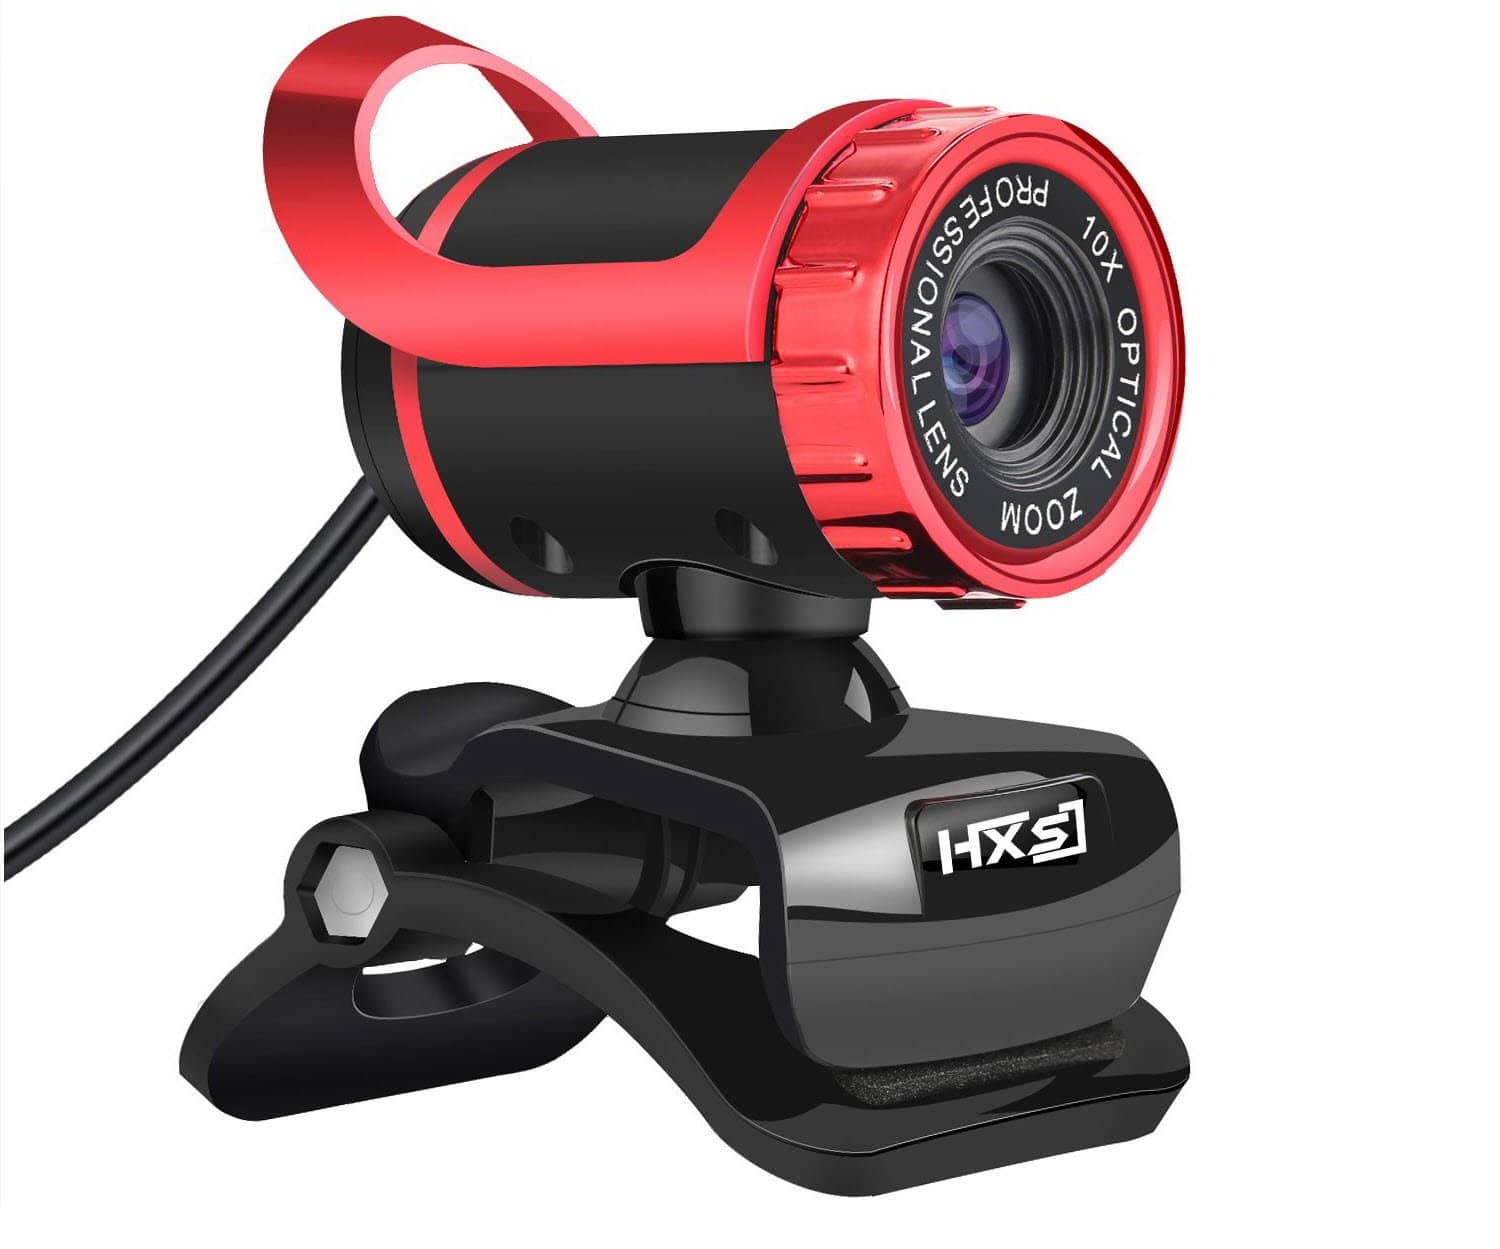 HXSJ Webcam 480P HD LG-68 Skype Web Camera Night vision HD